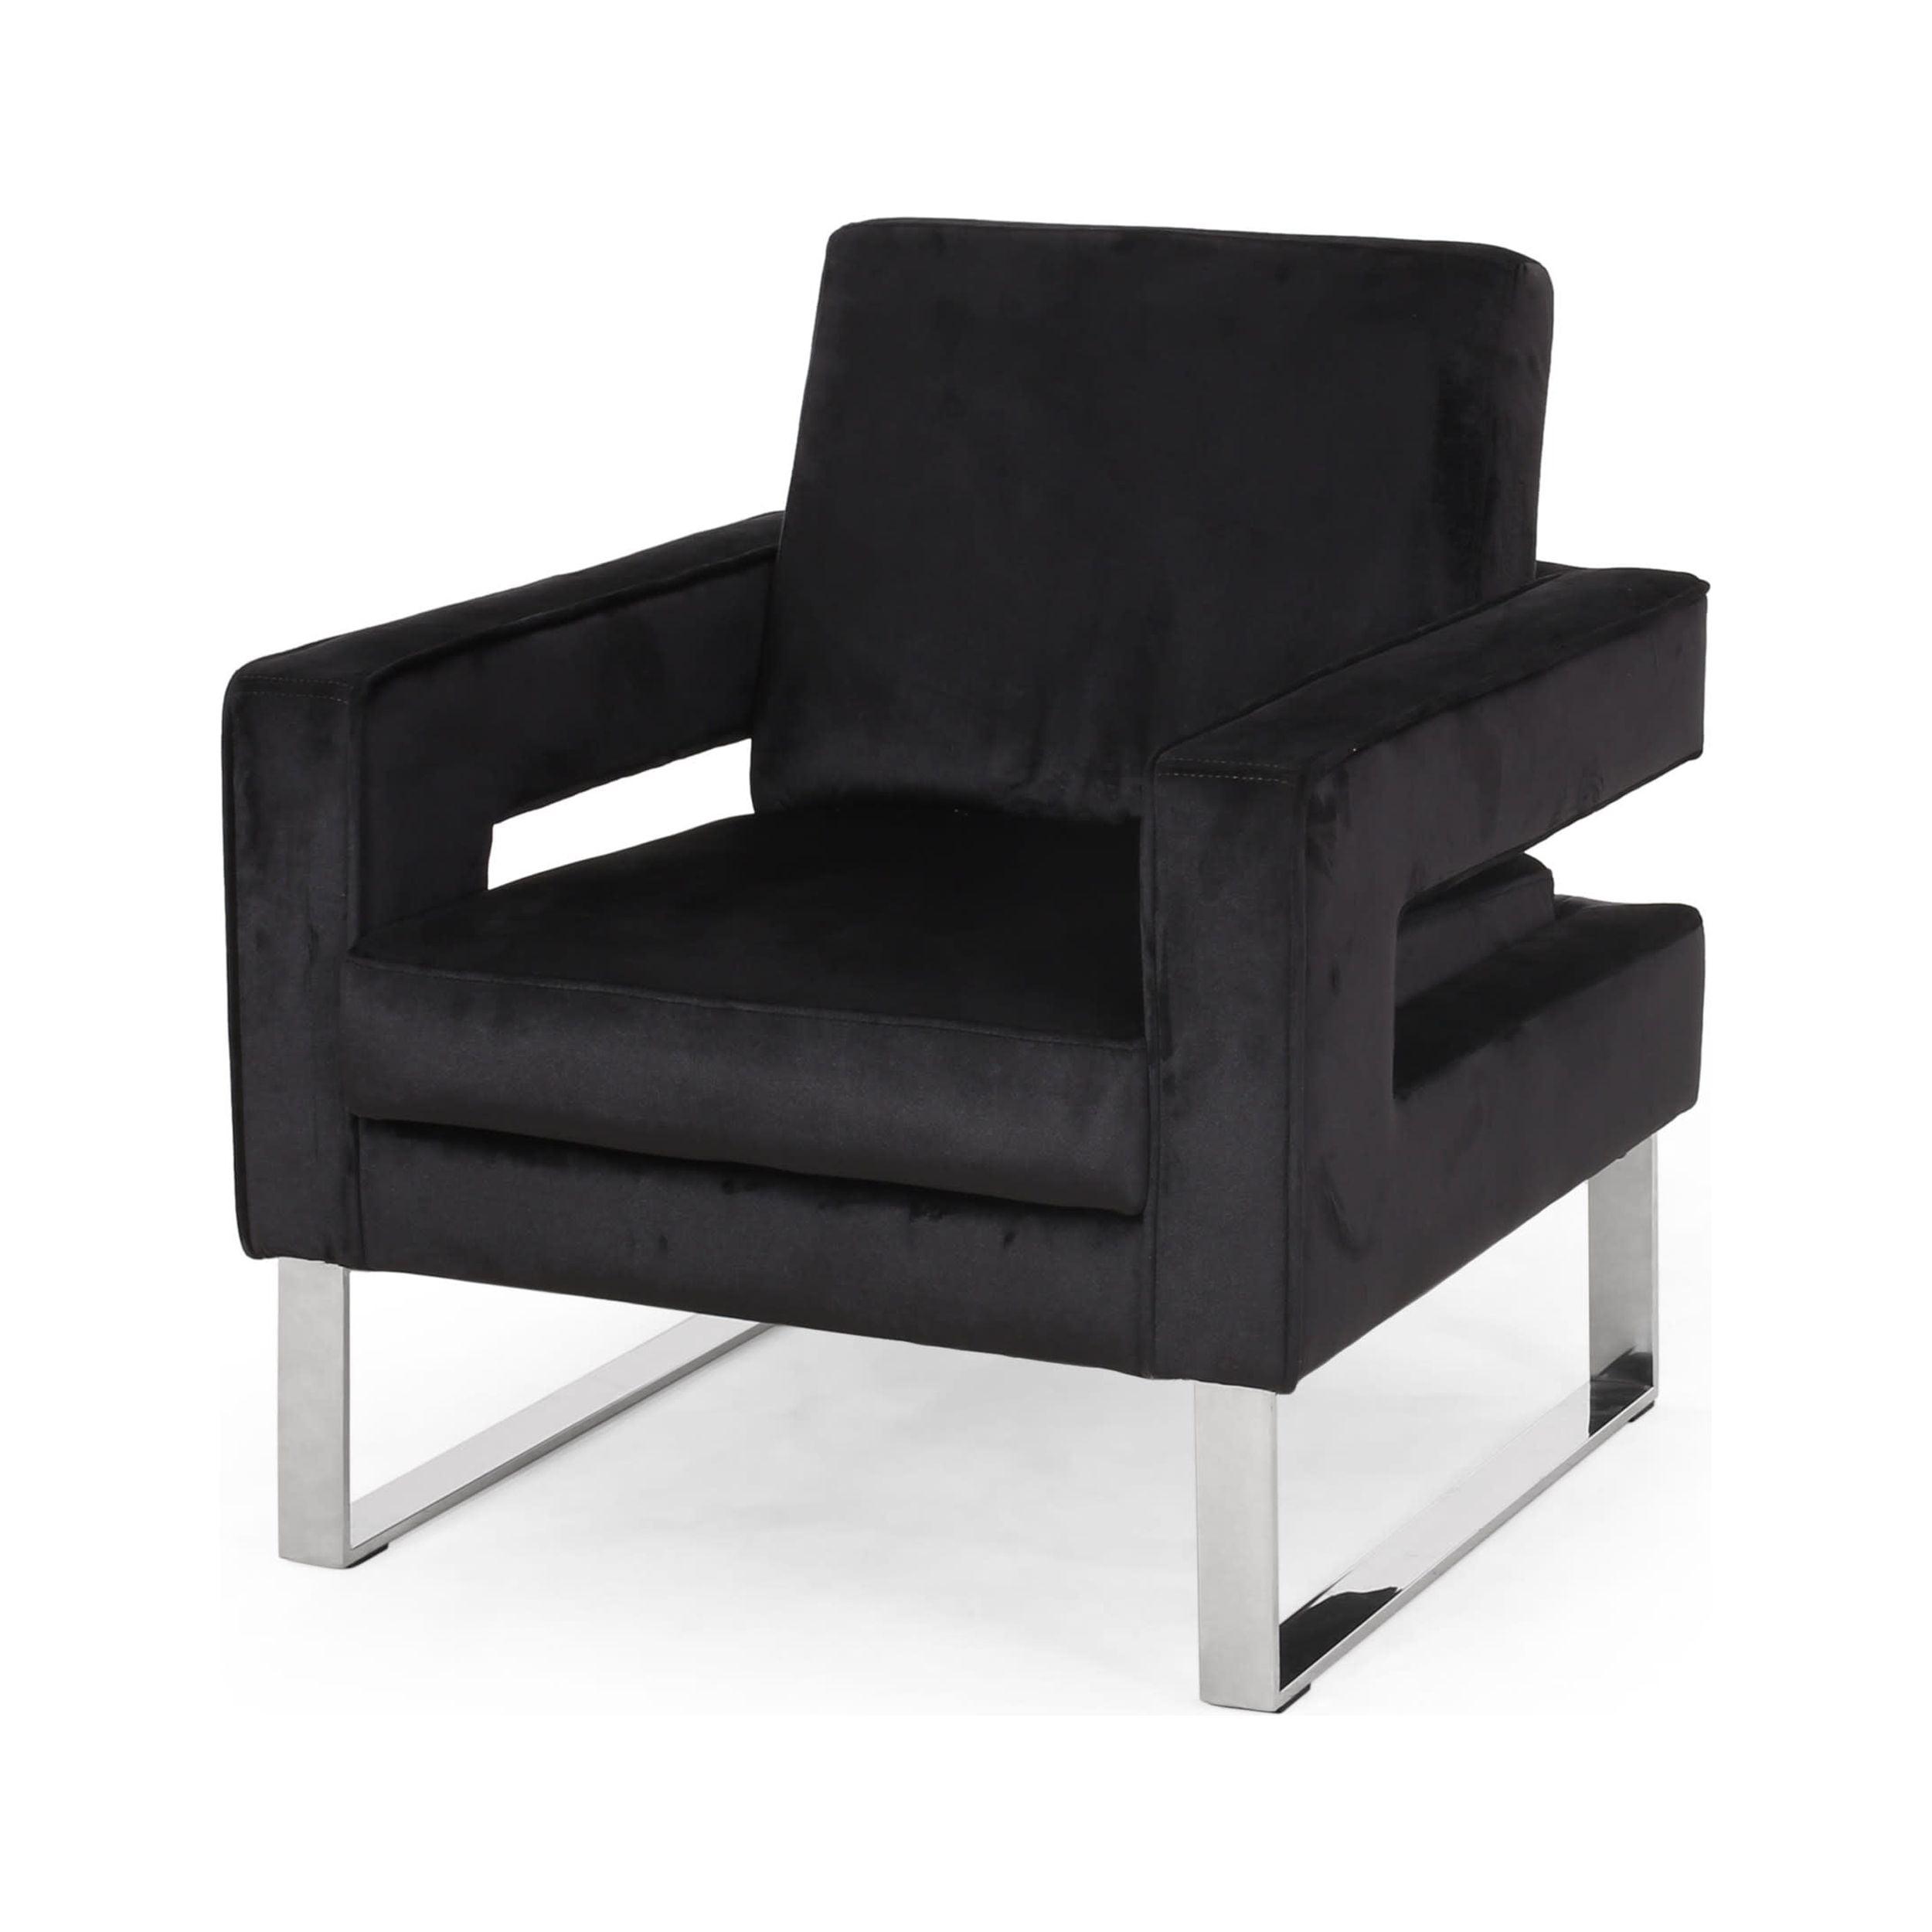 Sleek Modern Glam Velvet Club Chair with Geometric Cutouts, Black and Silver